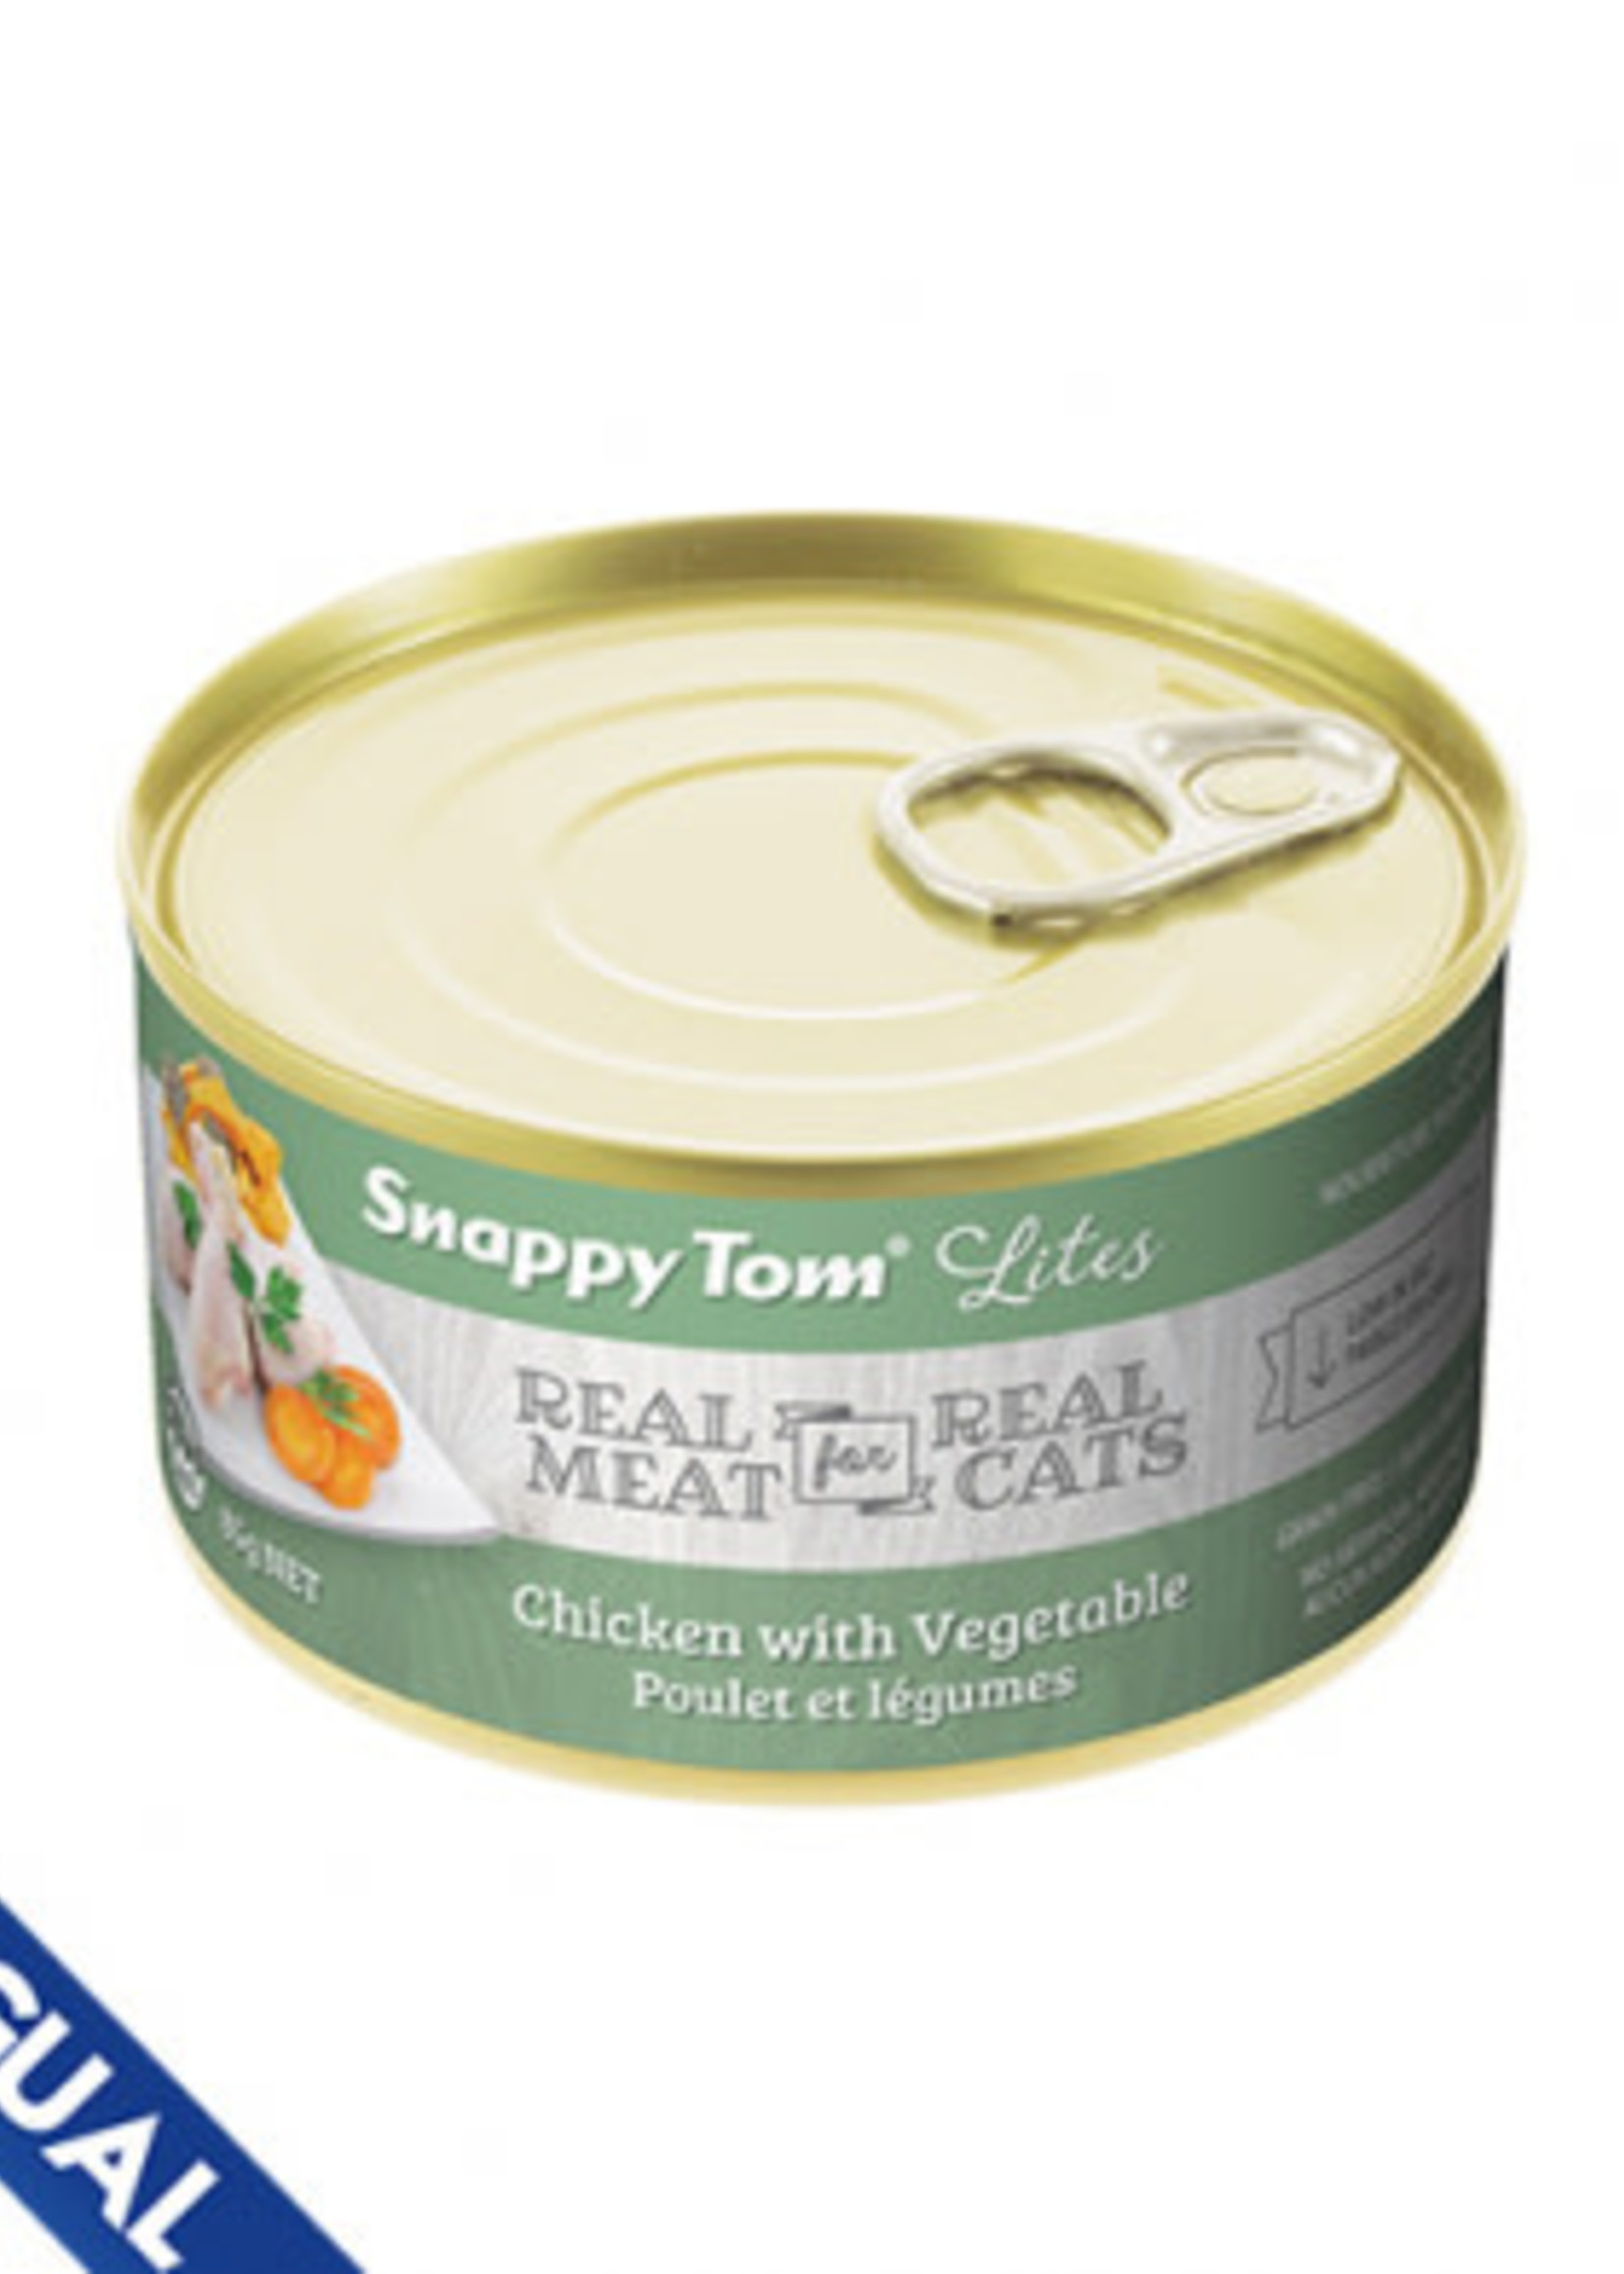 Snappy Tom Snappy Tom Lites Chicken with Vegtables 3oz